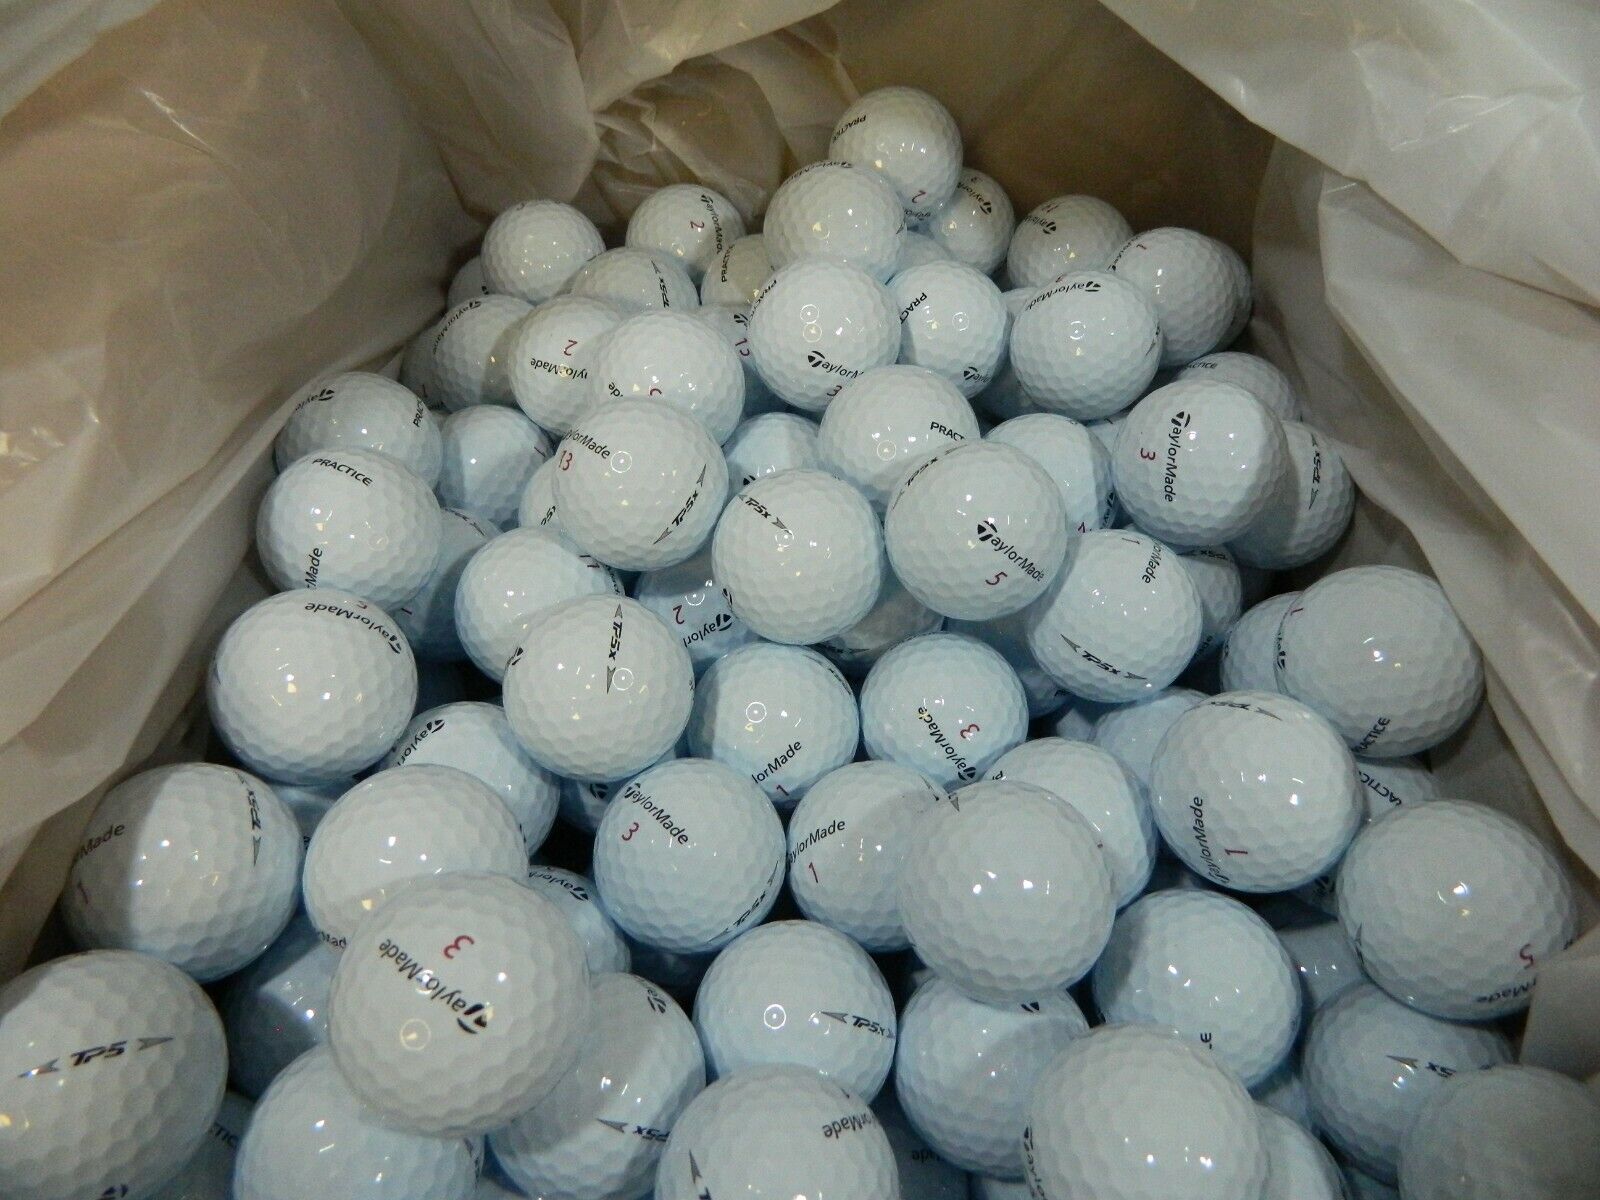 New 6 Dozen Taylormade TP5x Practice Golf Balls - 72 Balls Brand New TP-5x